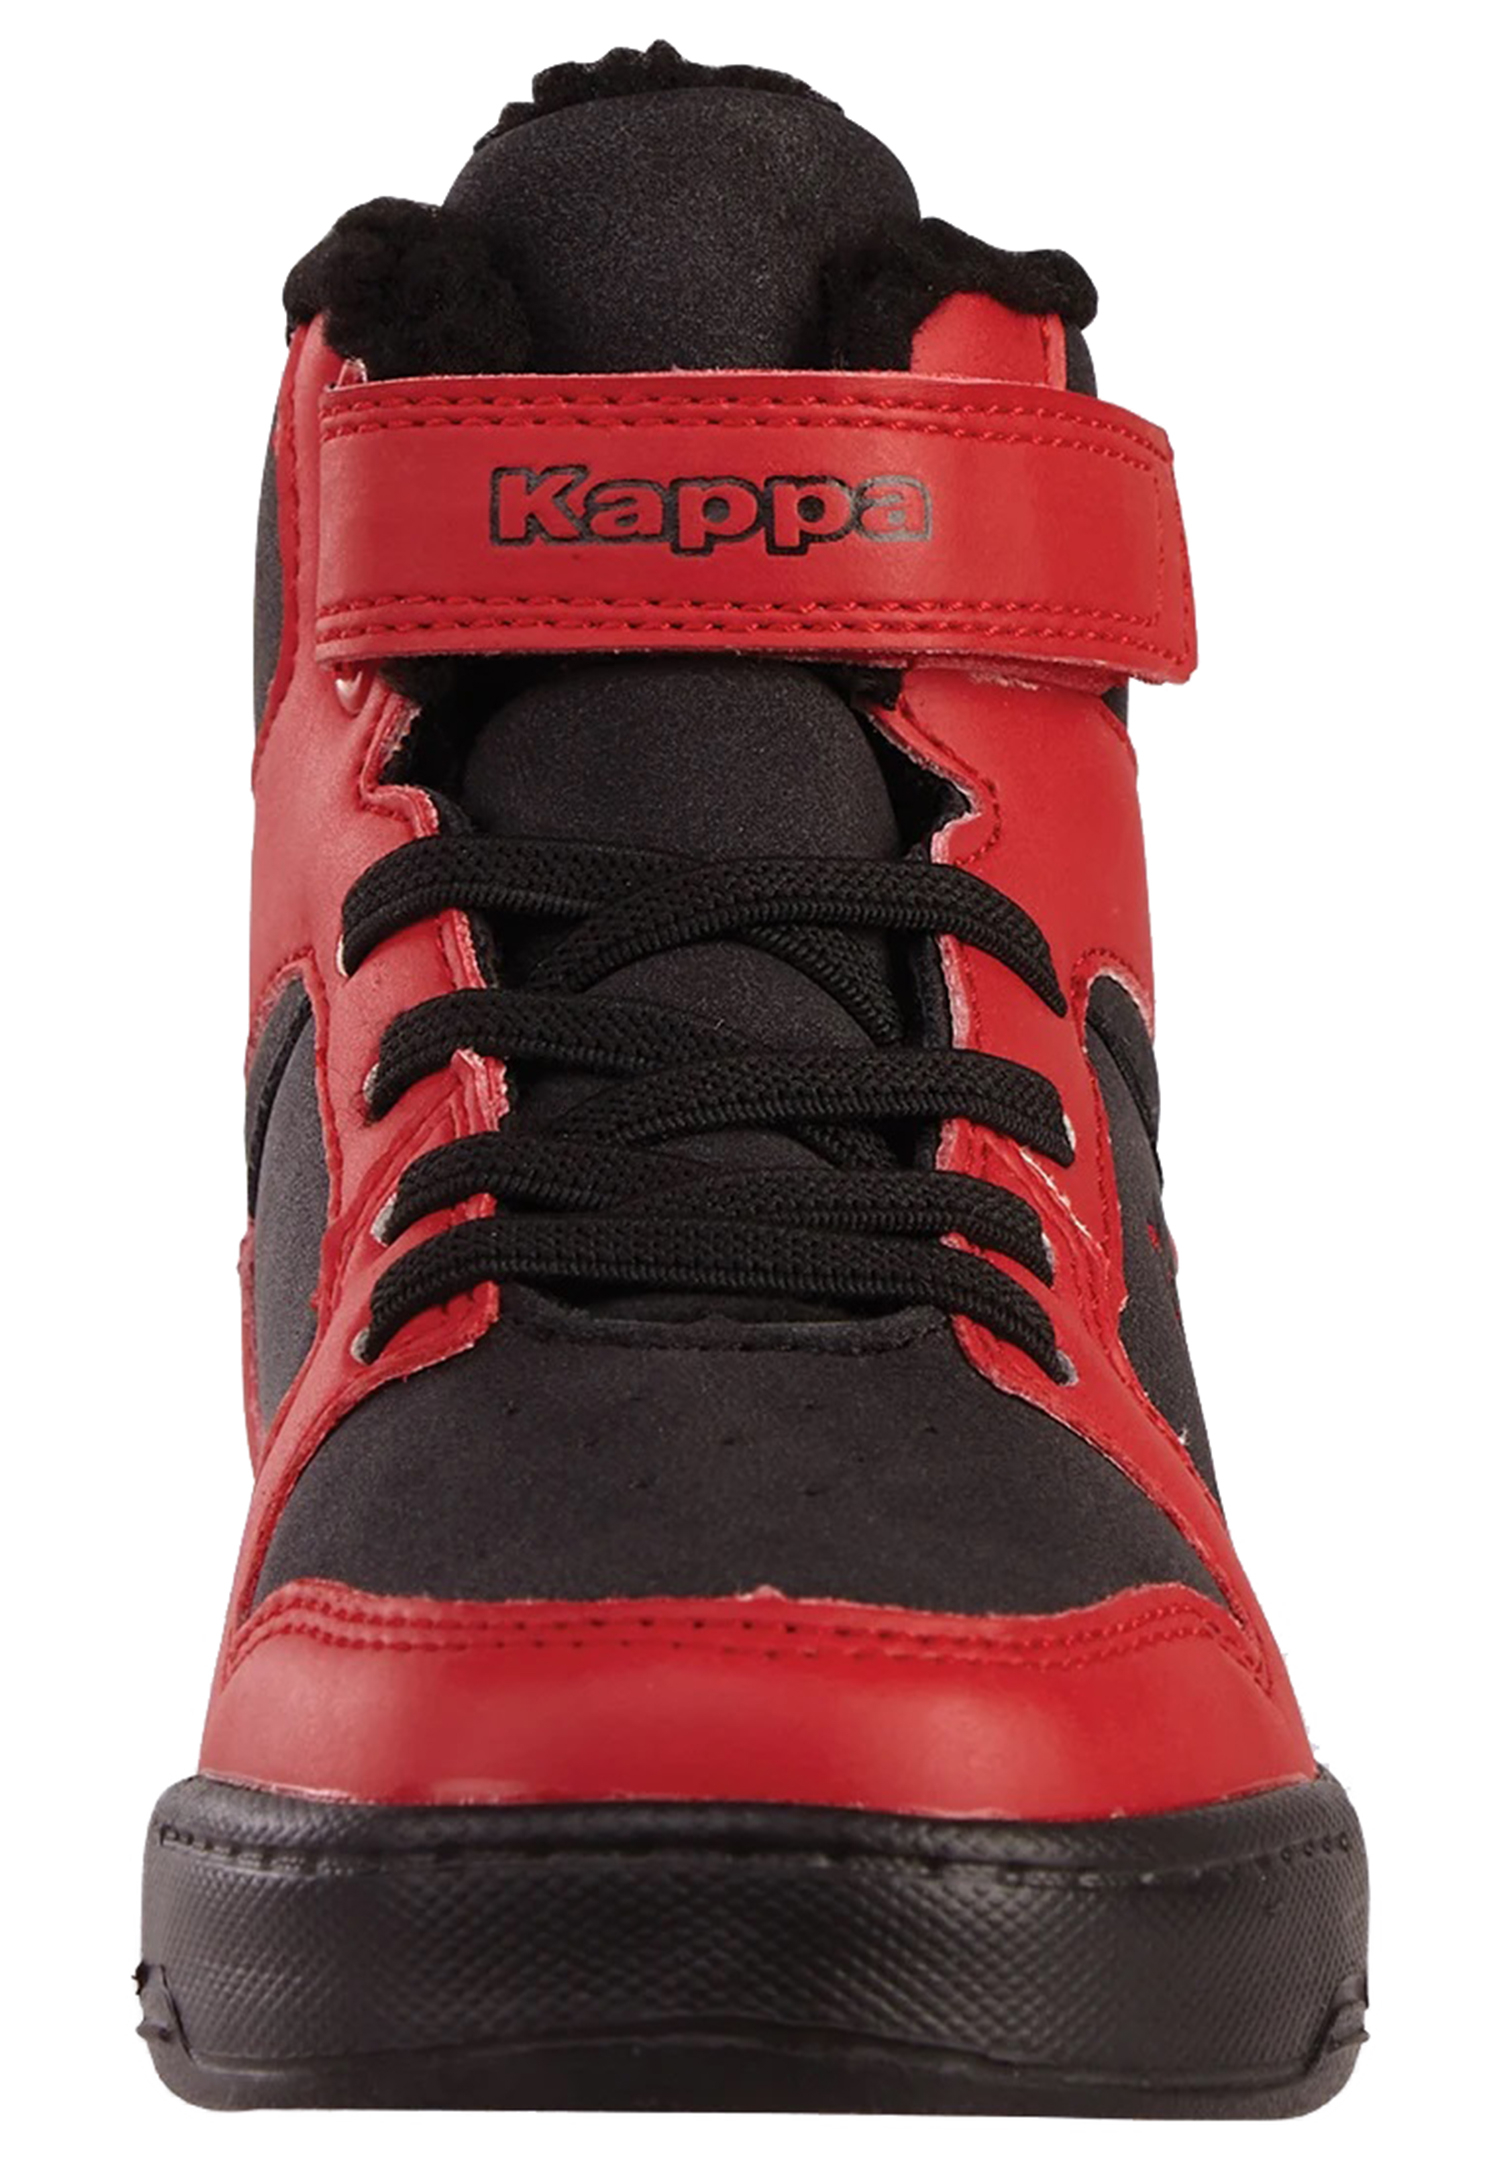 Kappa Unisex Kinder Sneaker High Top Stylecode 261071 2011 rot